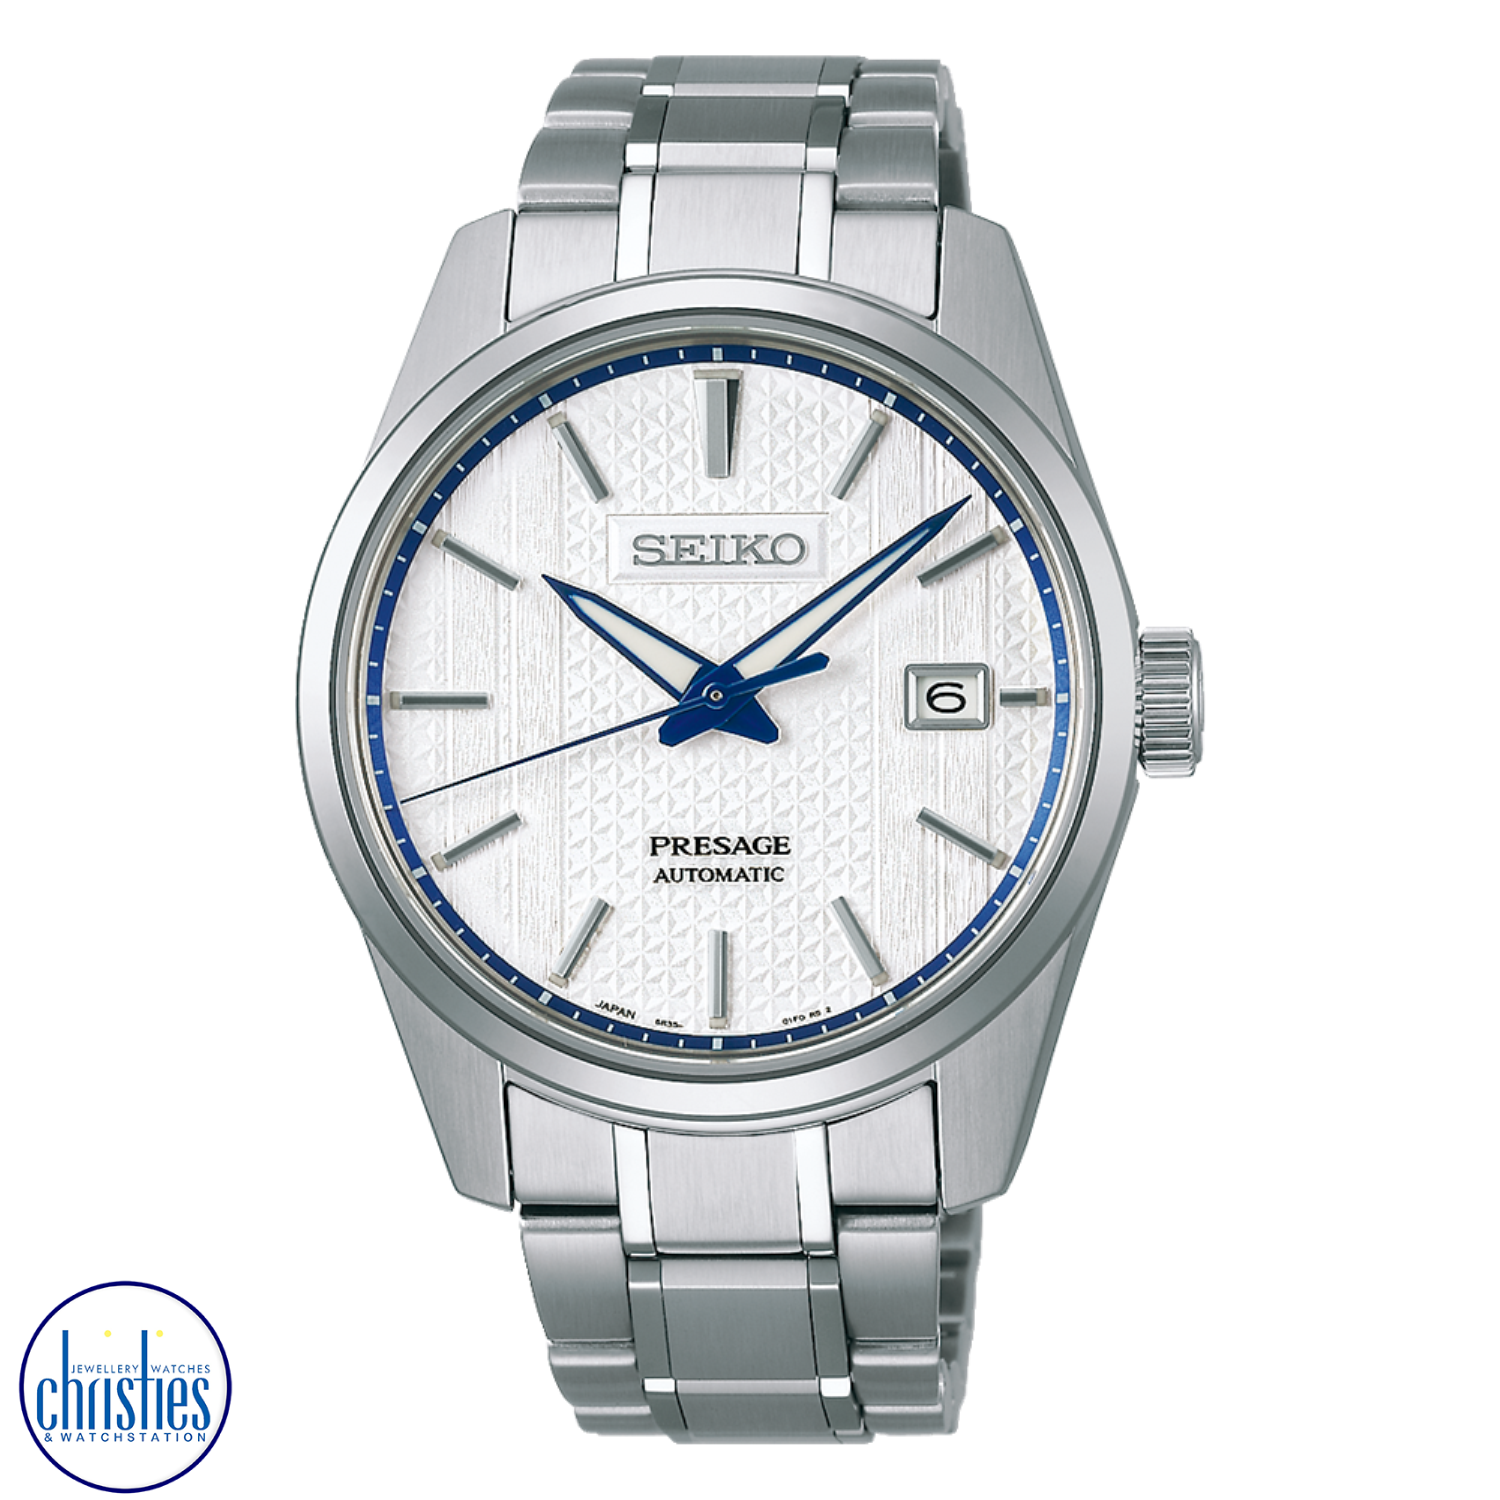 SPB277J  Seiko Presage Limited Edition Automatic Watch. The Seiko SPB277J is Sharp Edged Series ZERO HALLIBURTON Limited edition, high-quality timepiece that boasts a range of impressive features.